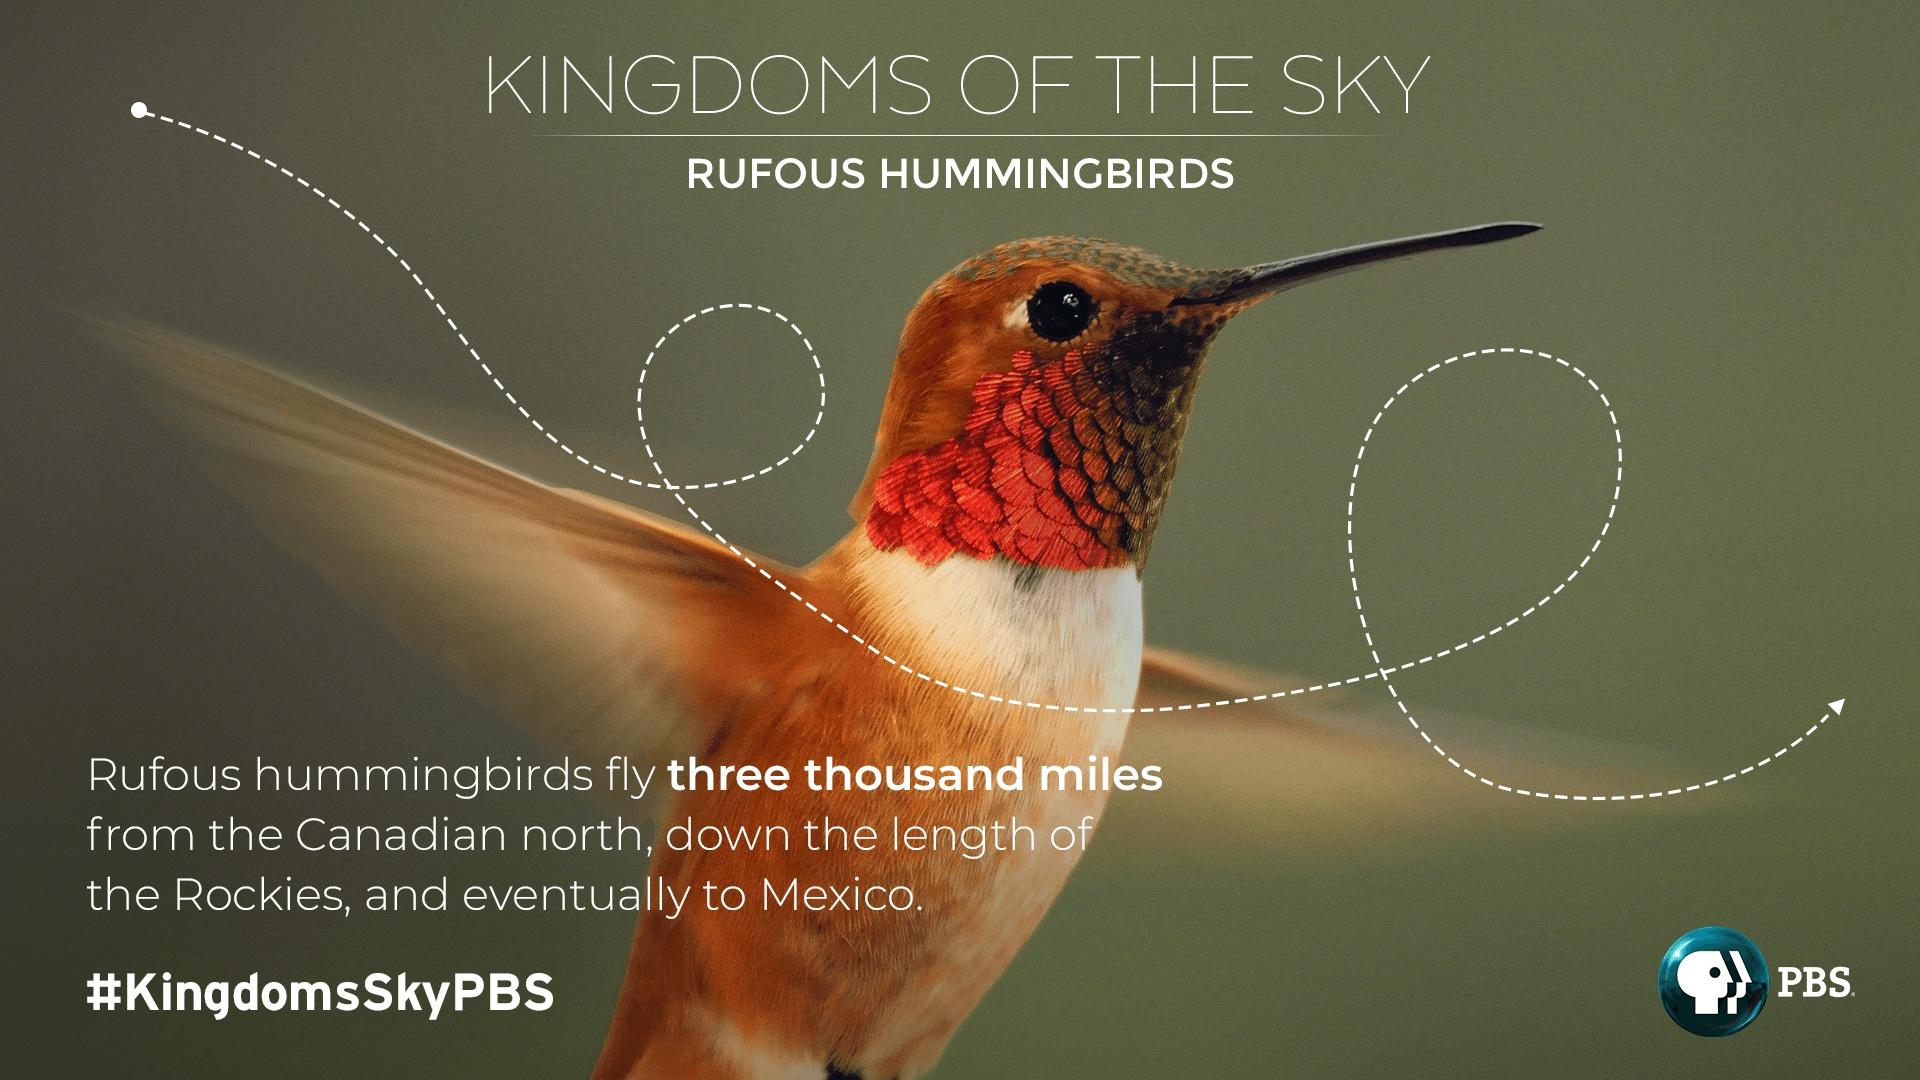 Rufous hummingbirds